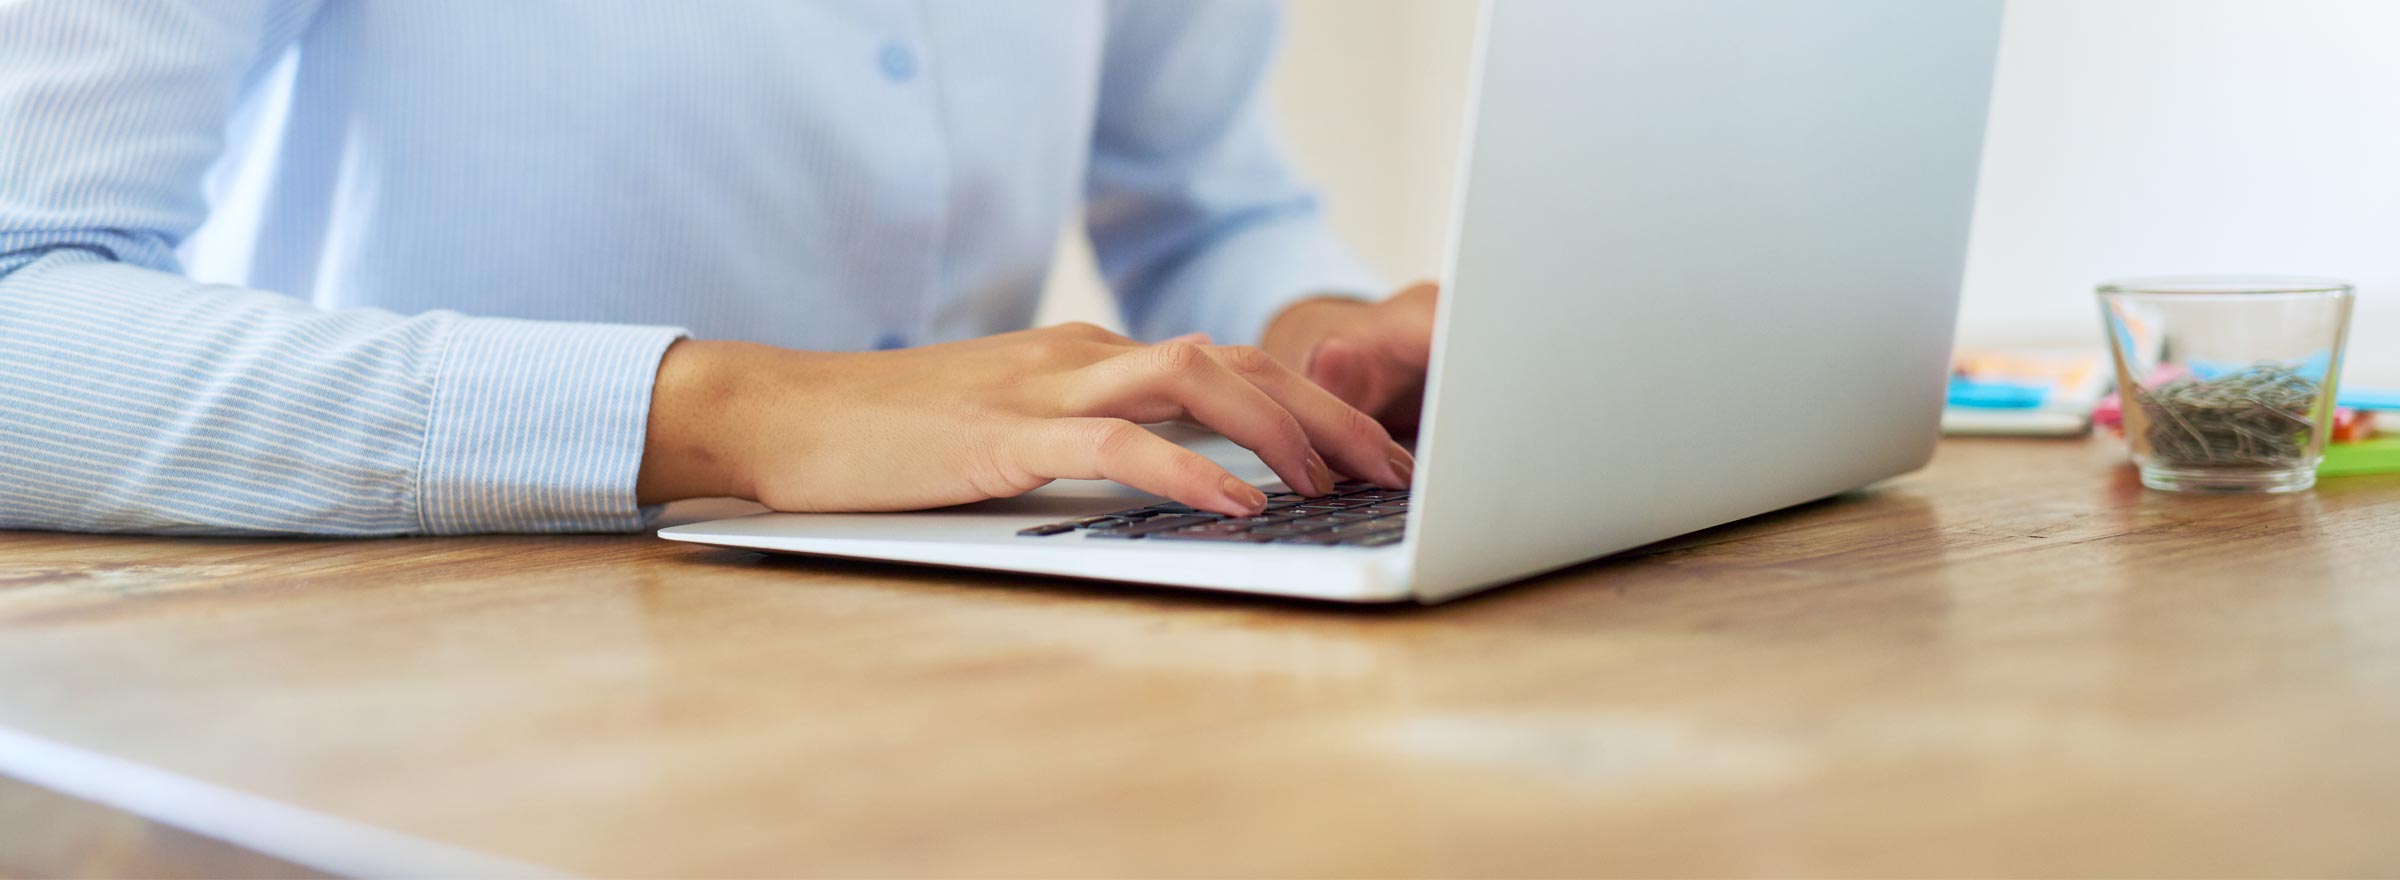 woman's hands on a laptop keyboard